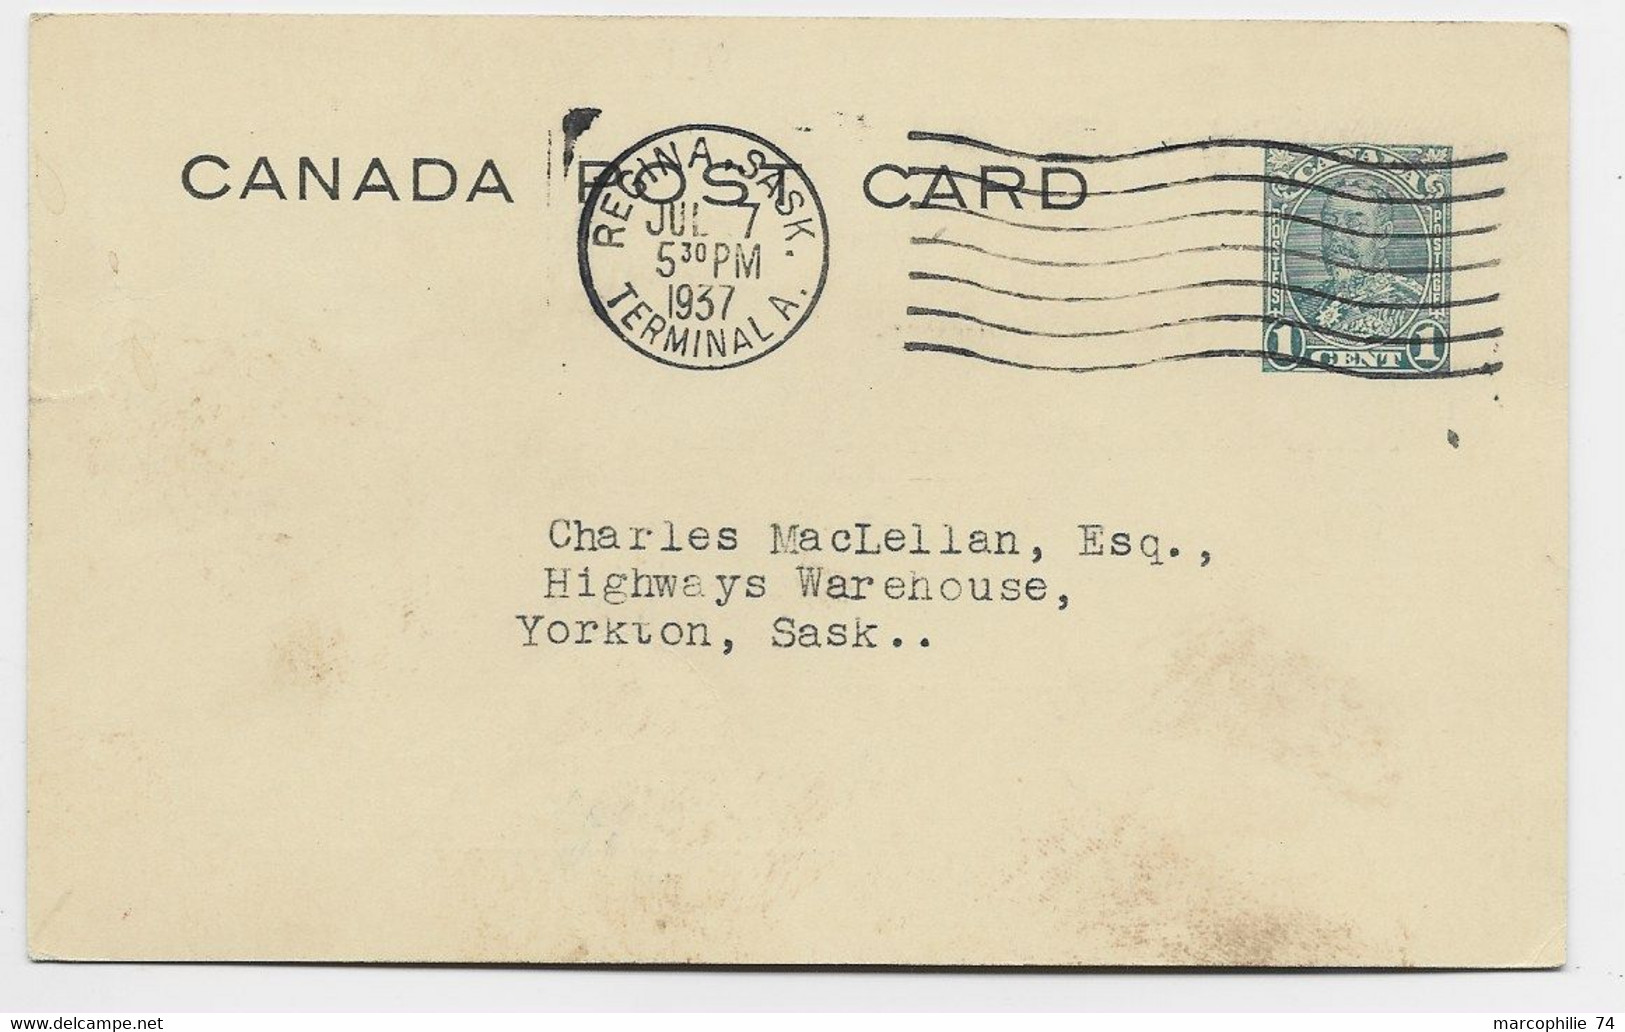 CANADA ENTIER 1 CENT POST CARD REGINA SASK JUL 7 1937 REPIQUAGE MOTOR LICENSE OFFICE - 1903-1954 Könige